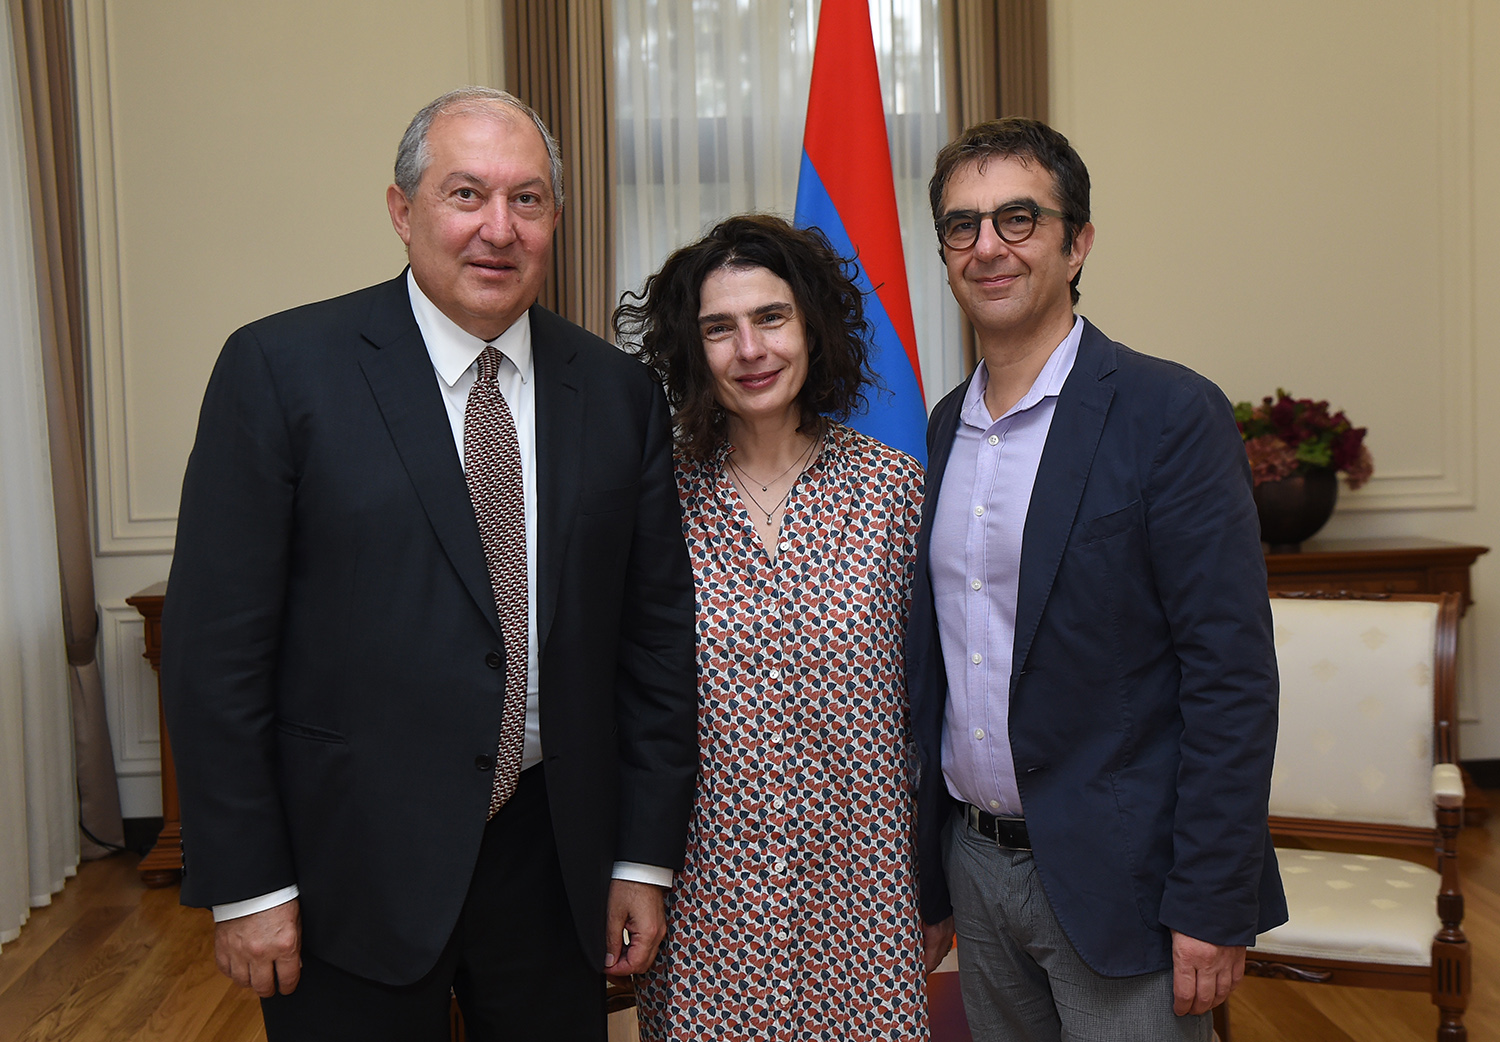 President received Atom Egoyan and Arsinée Khanjian